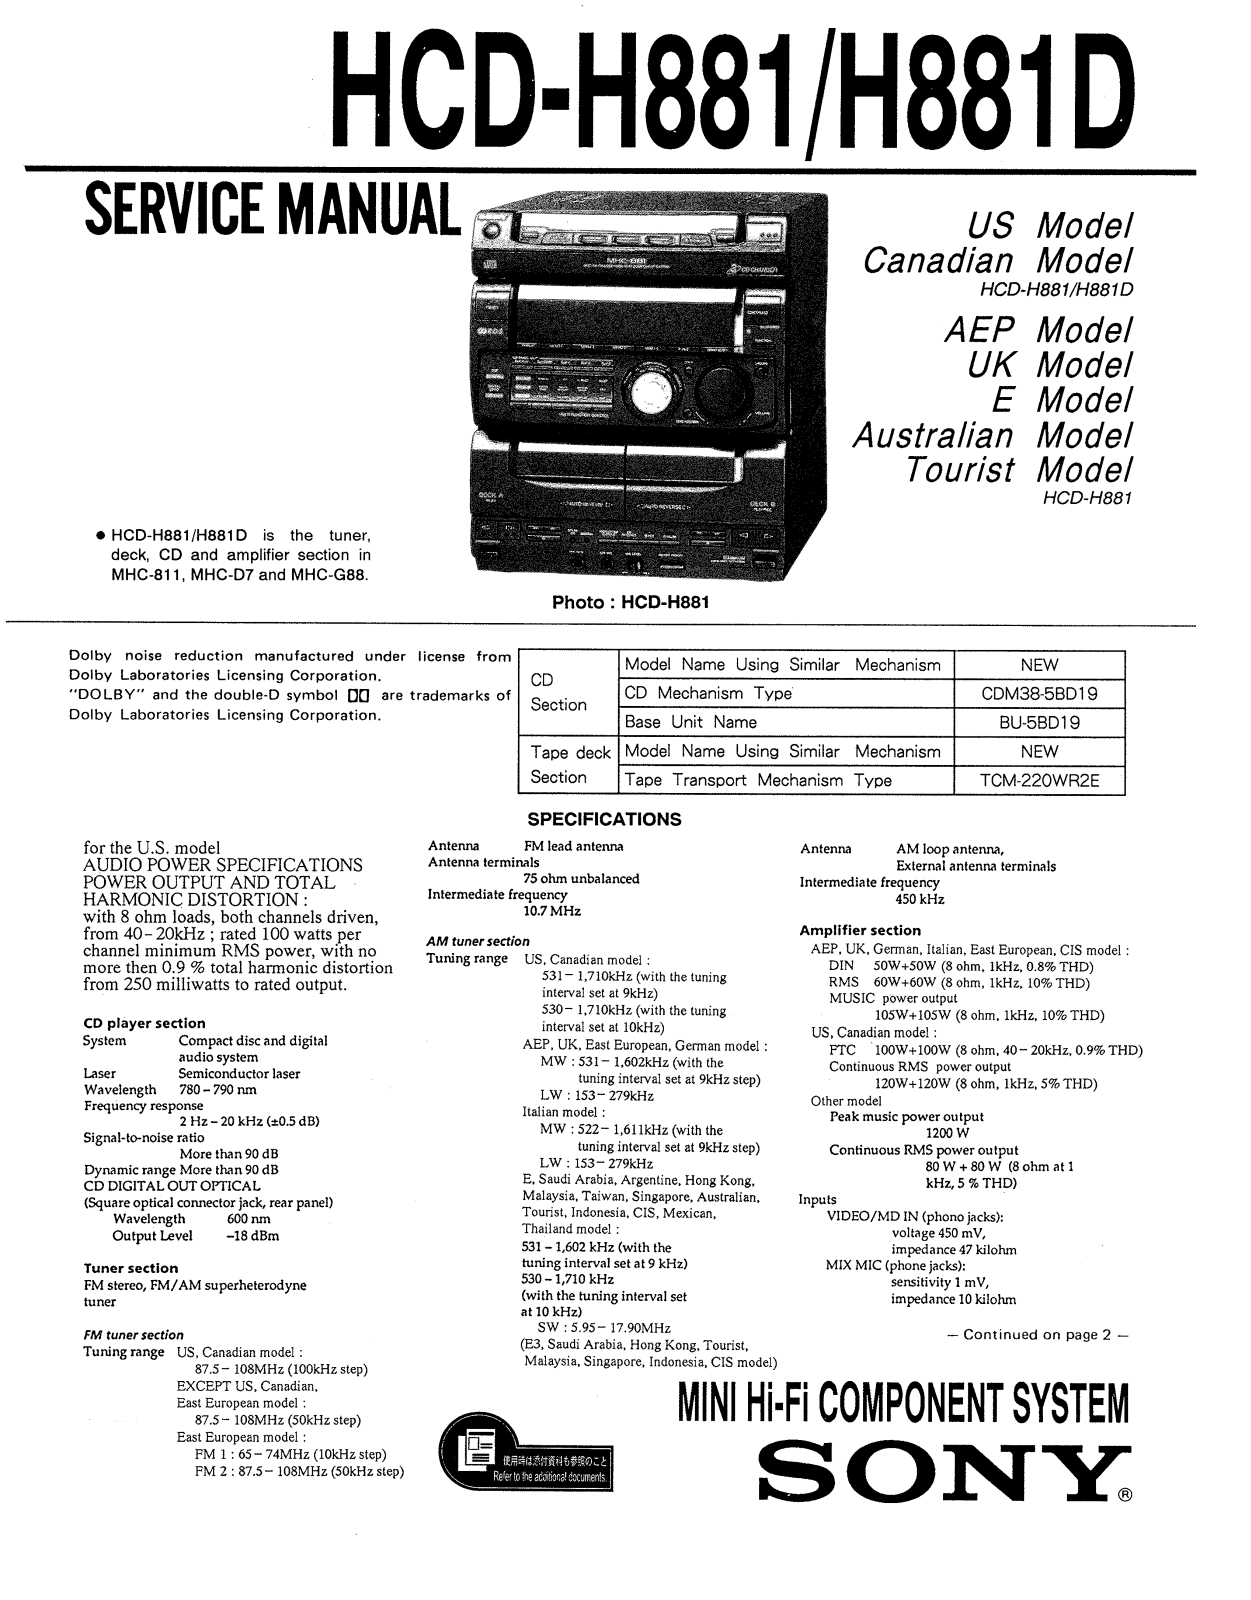 Sony HCD-H881, HCD-H881D Service manual